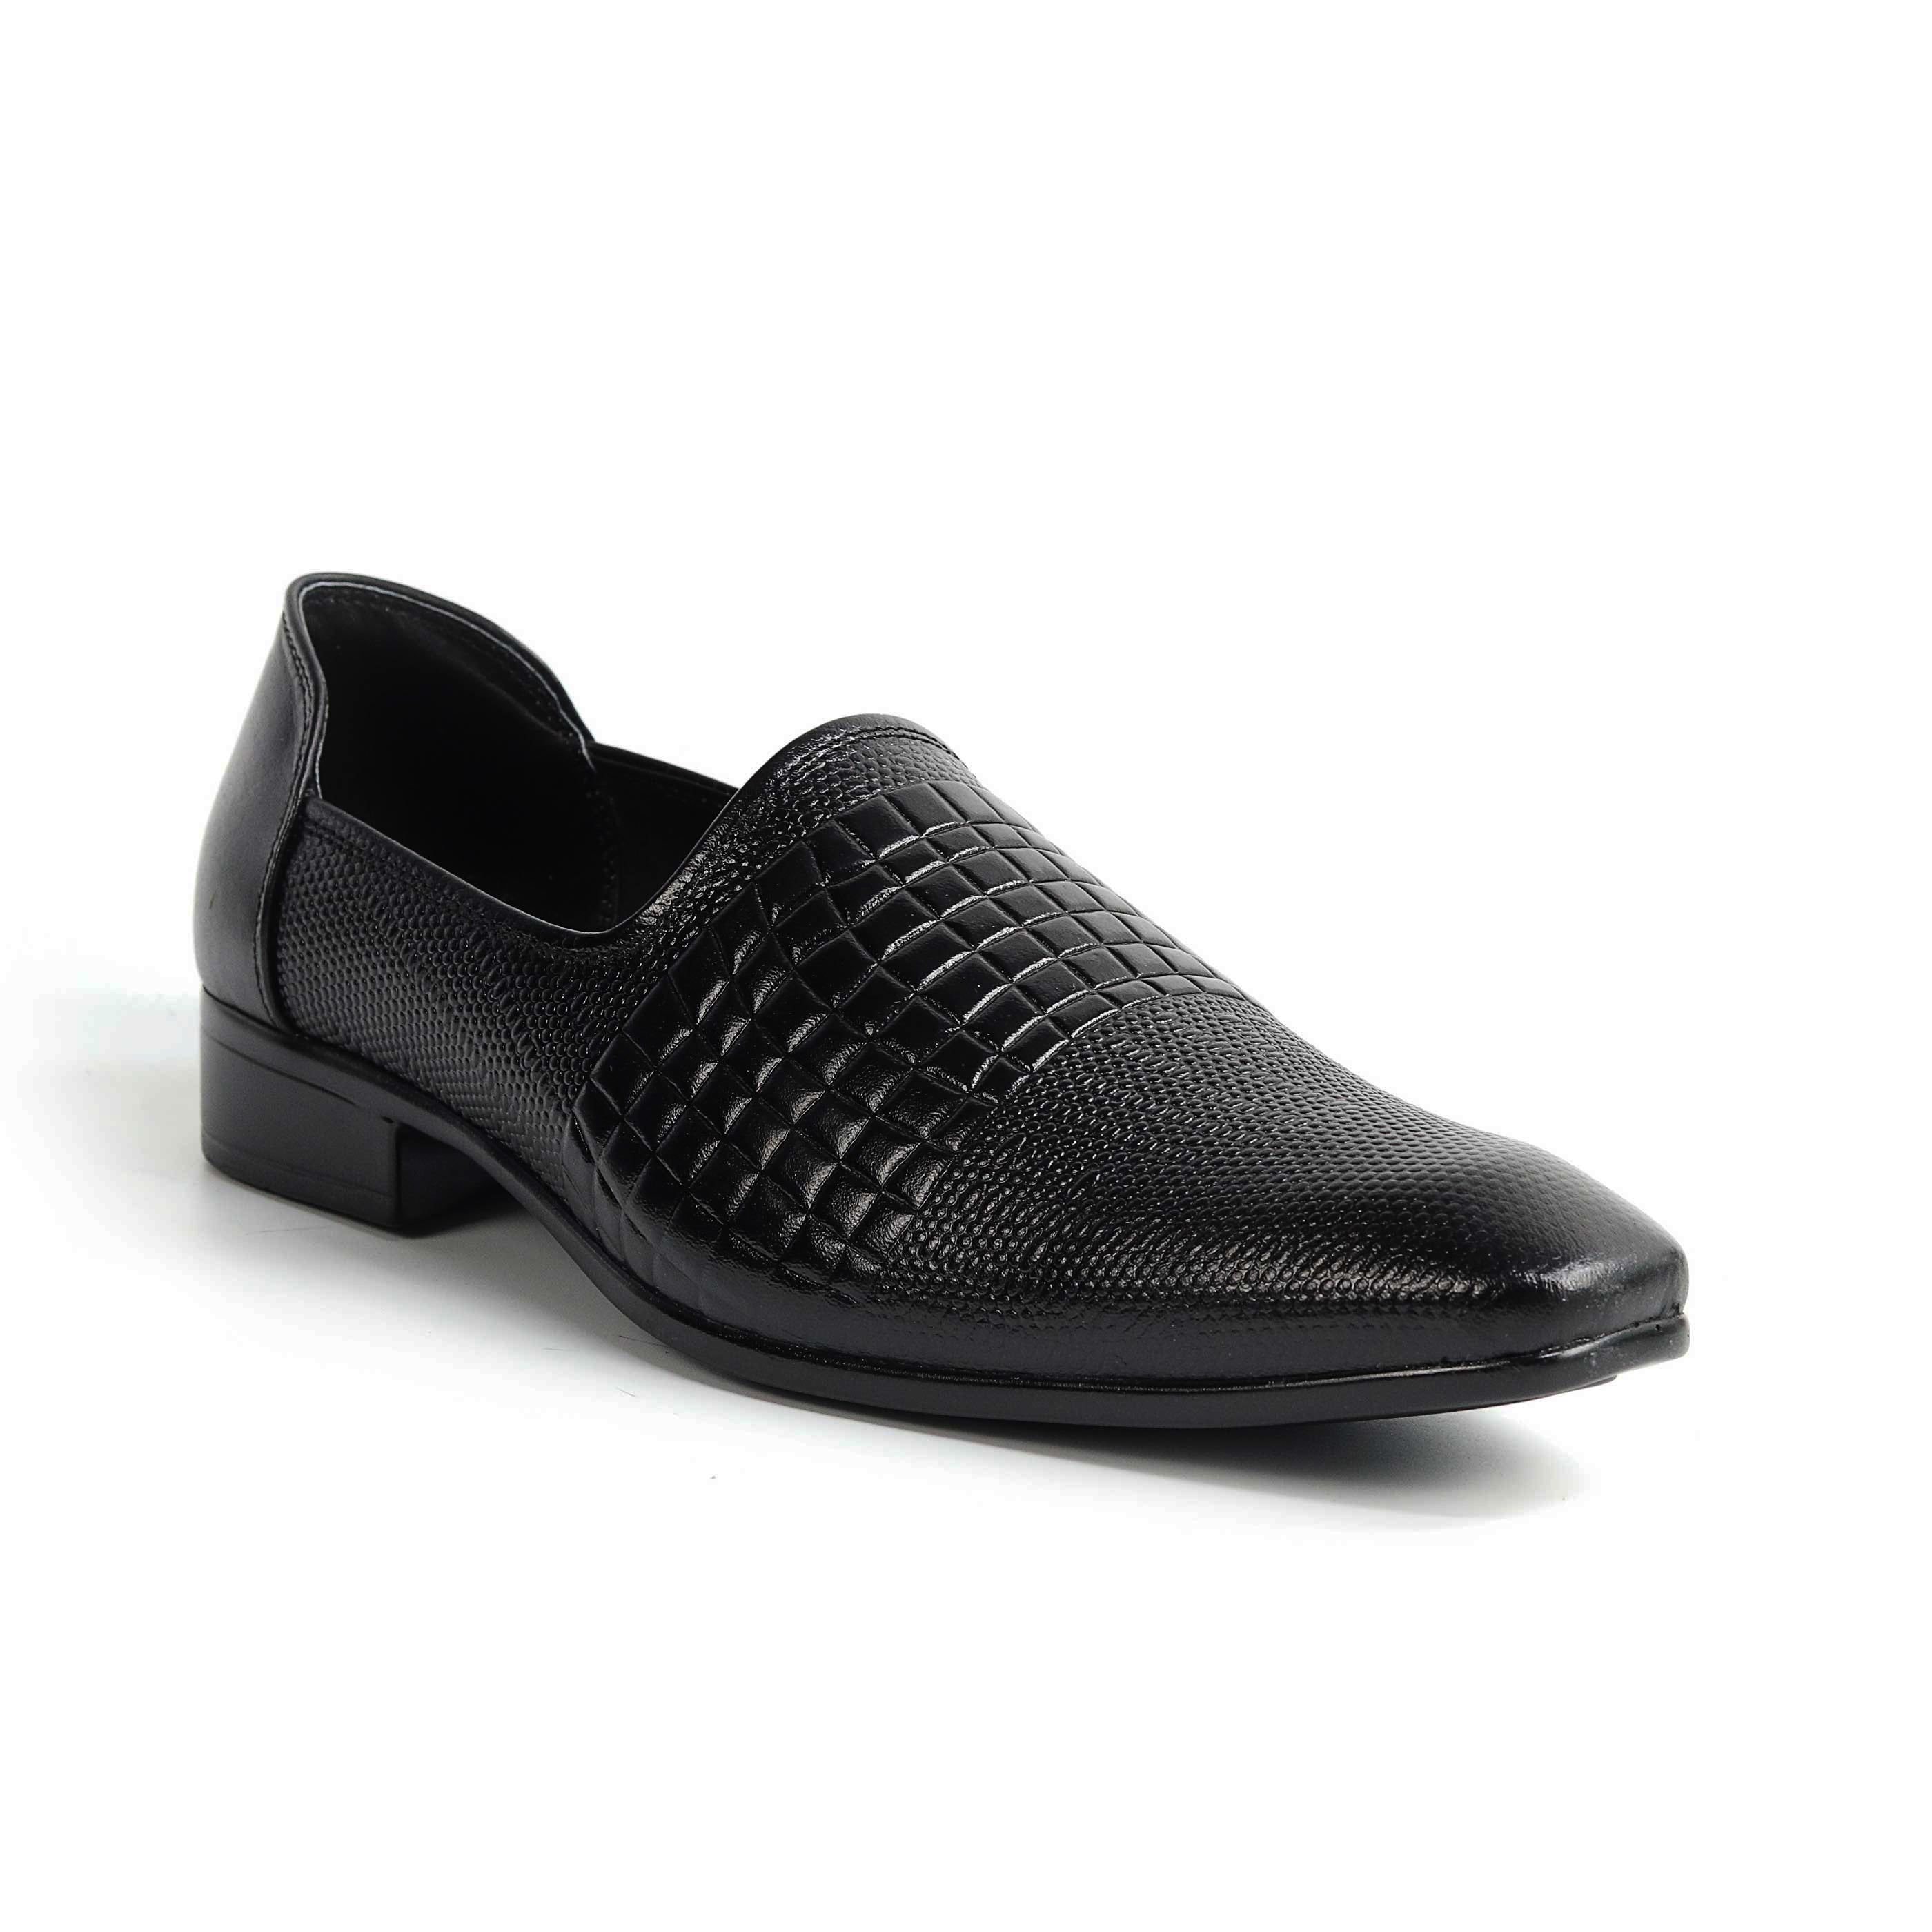 Zays Leather Premium Casual Shoe (Girish) For Men - ZAYSSF19